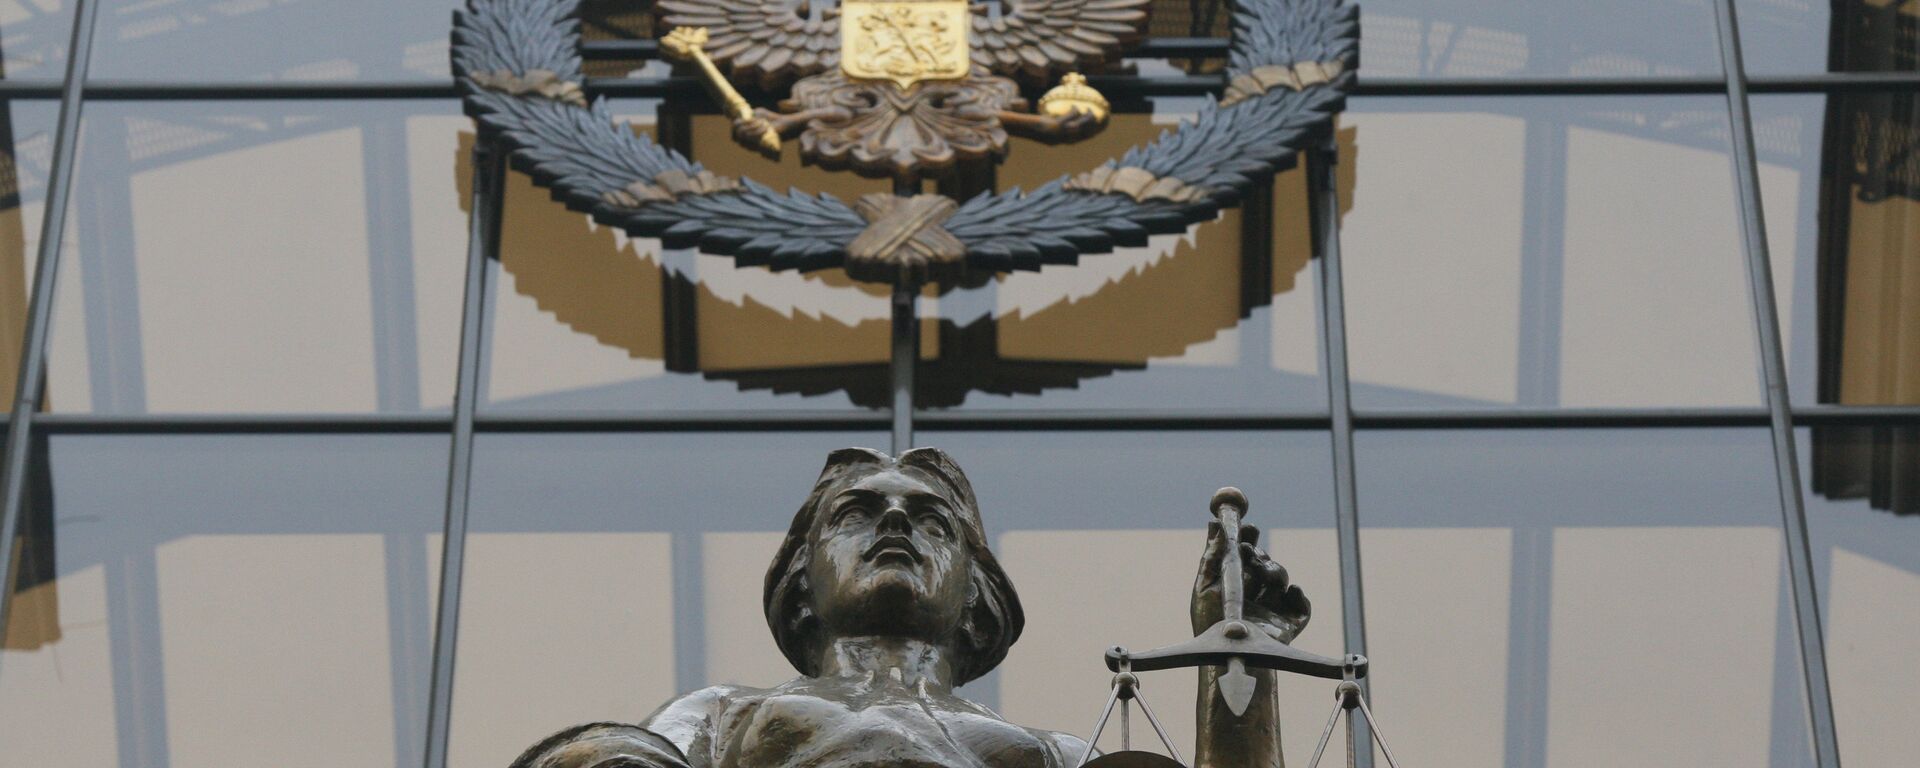 Tribunal Supremo de Rusia - Sputnik Mundo, 1920, 28.01.2015